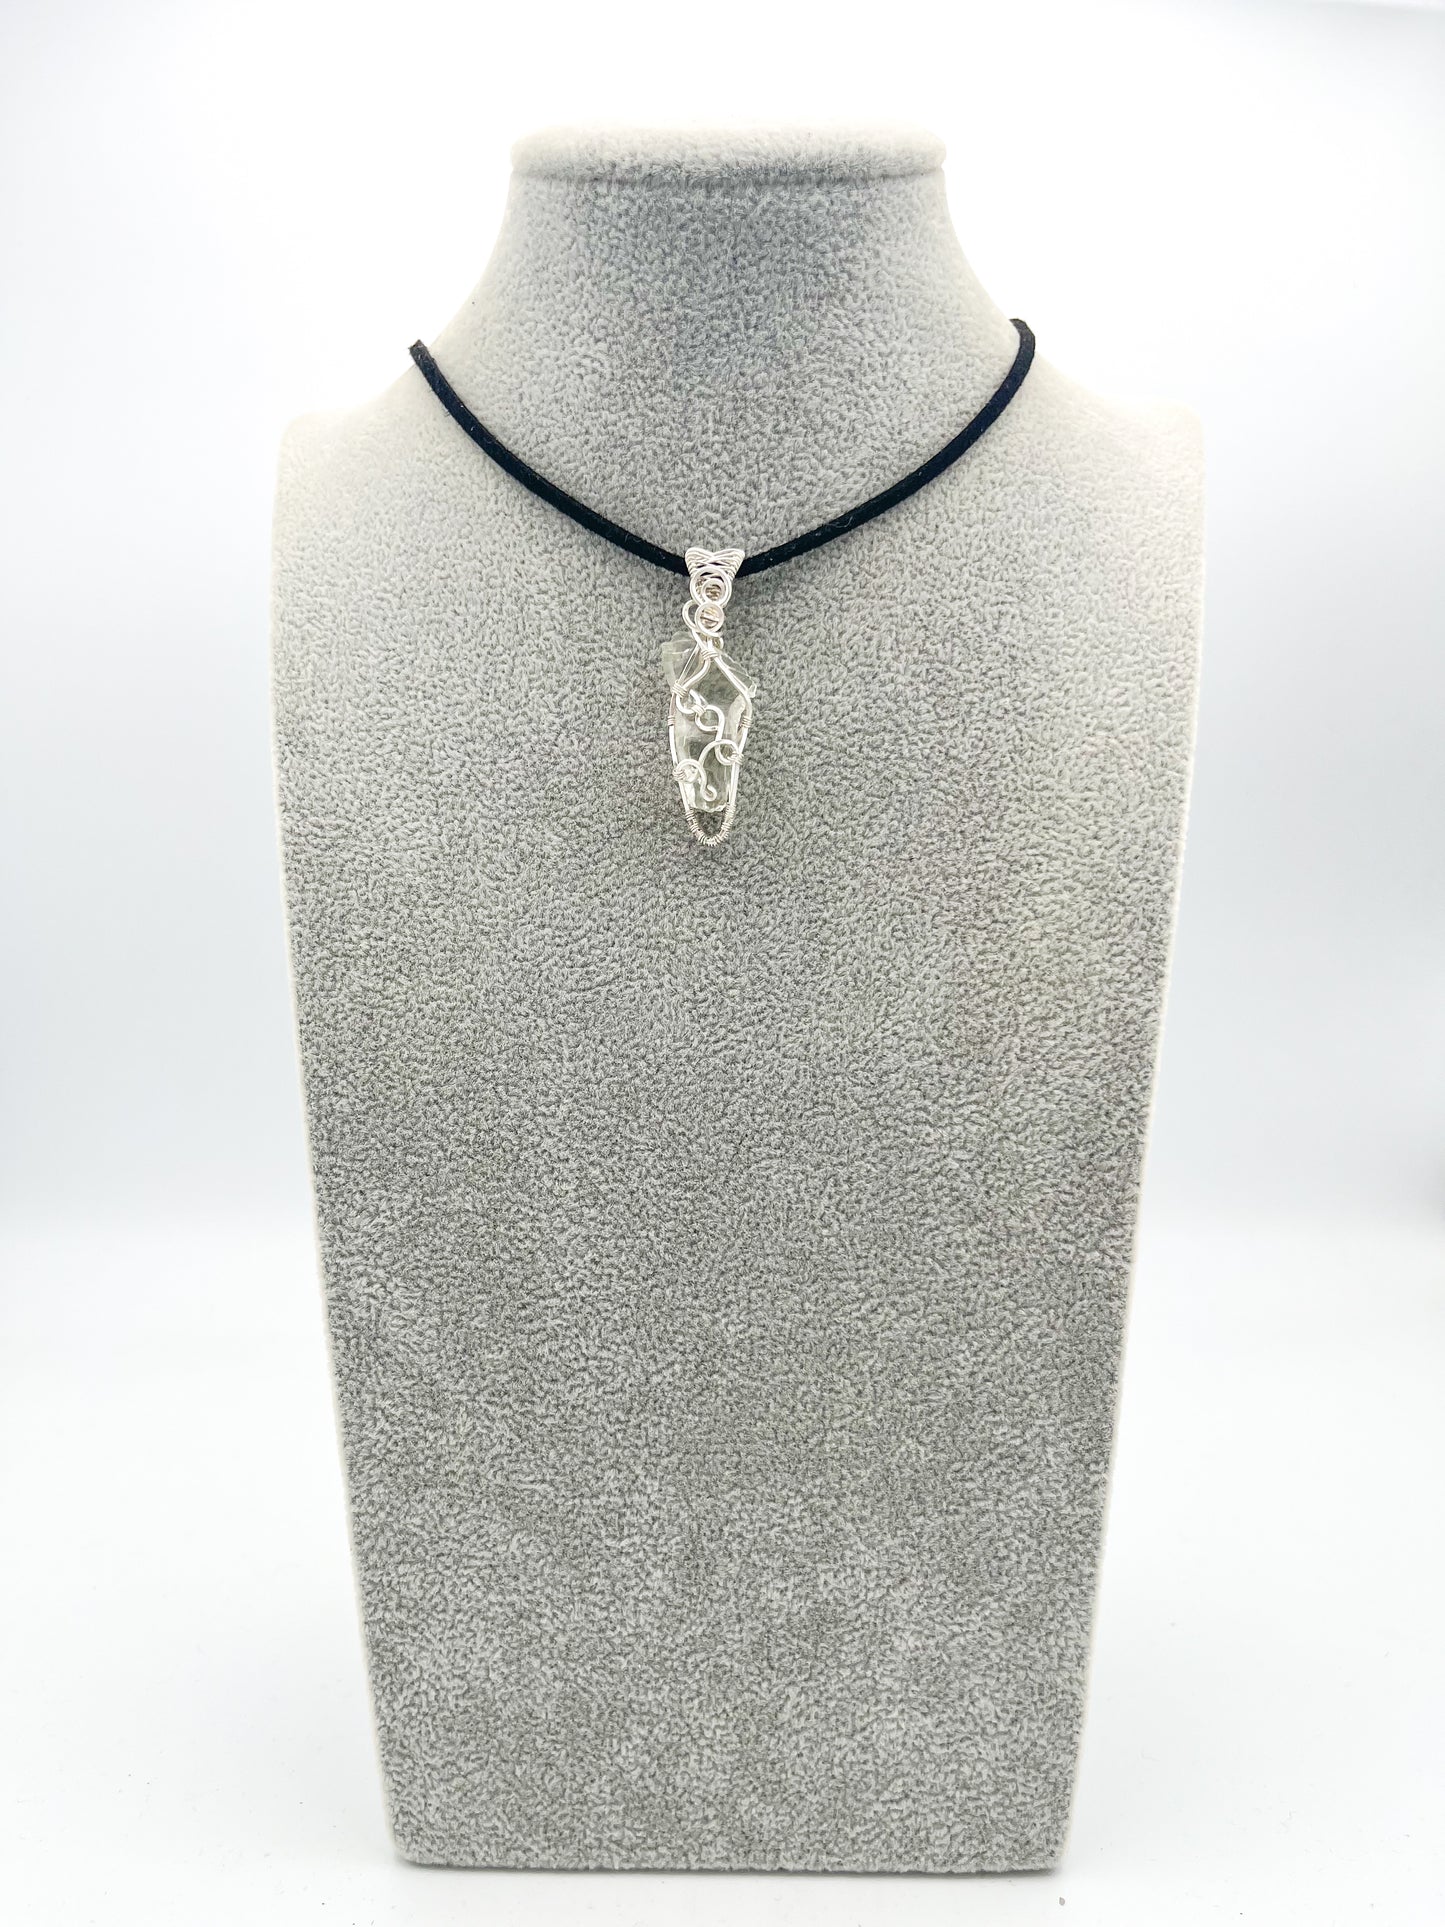 Genuine clear andara crystal silver pendant